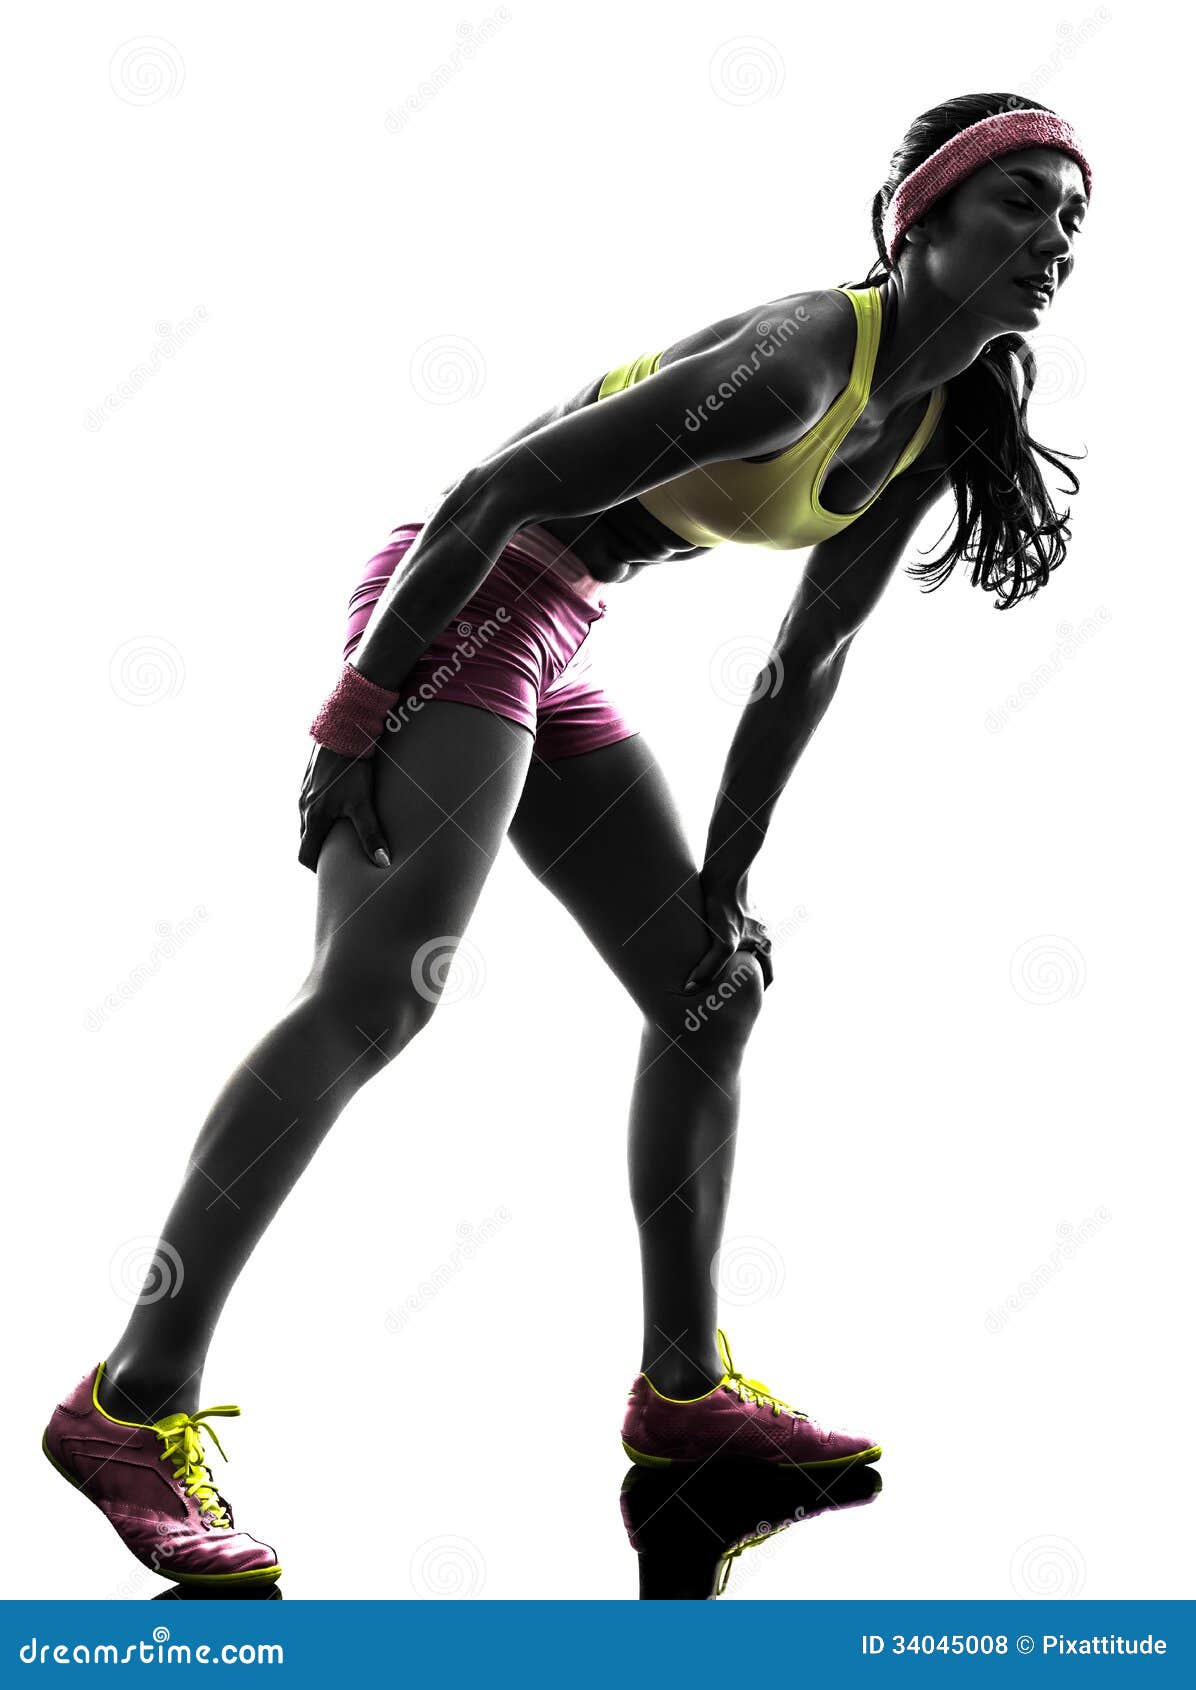 woman runner running pain muscle cramp silhouette